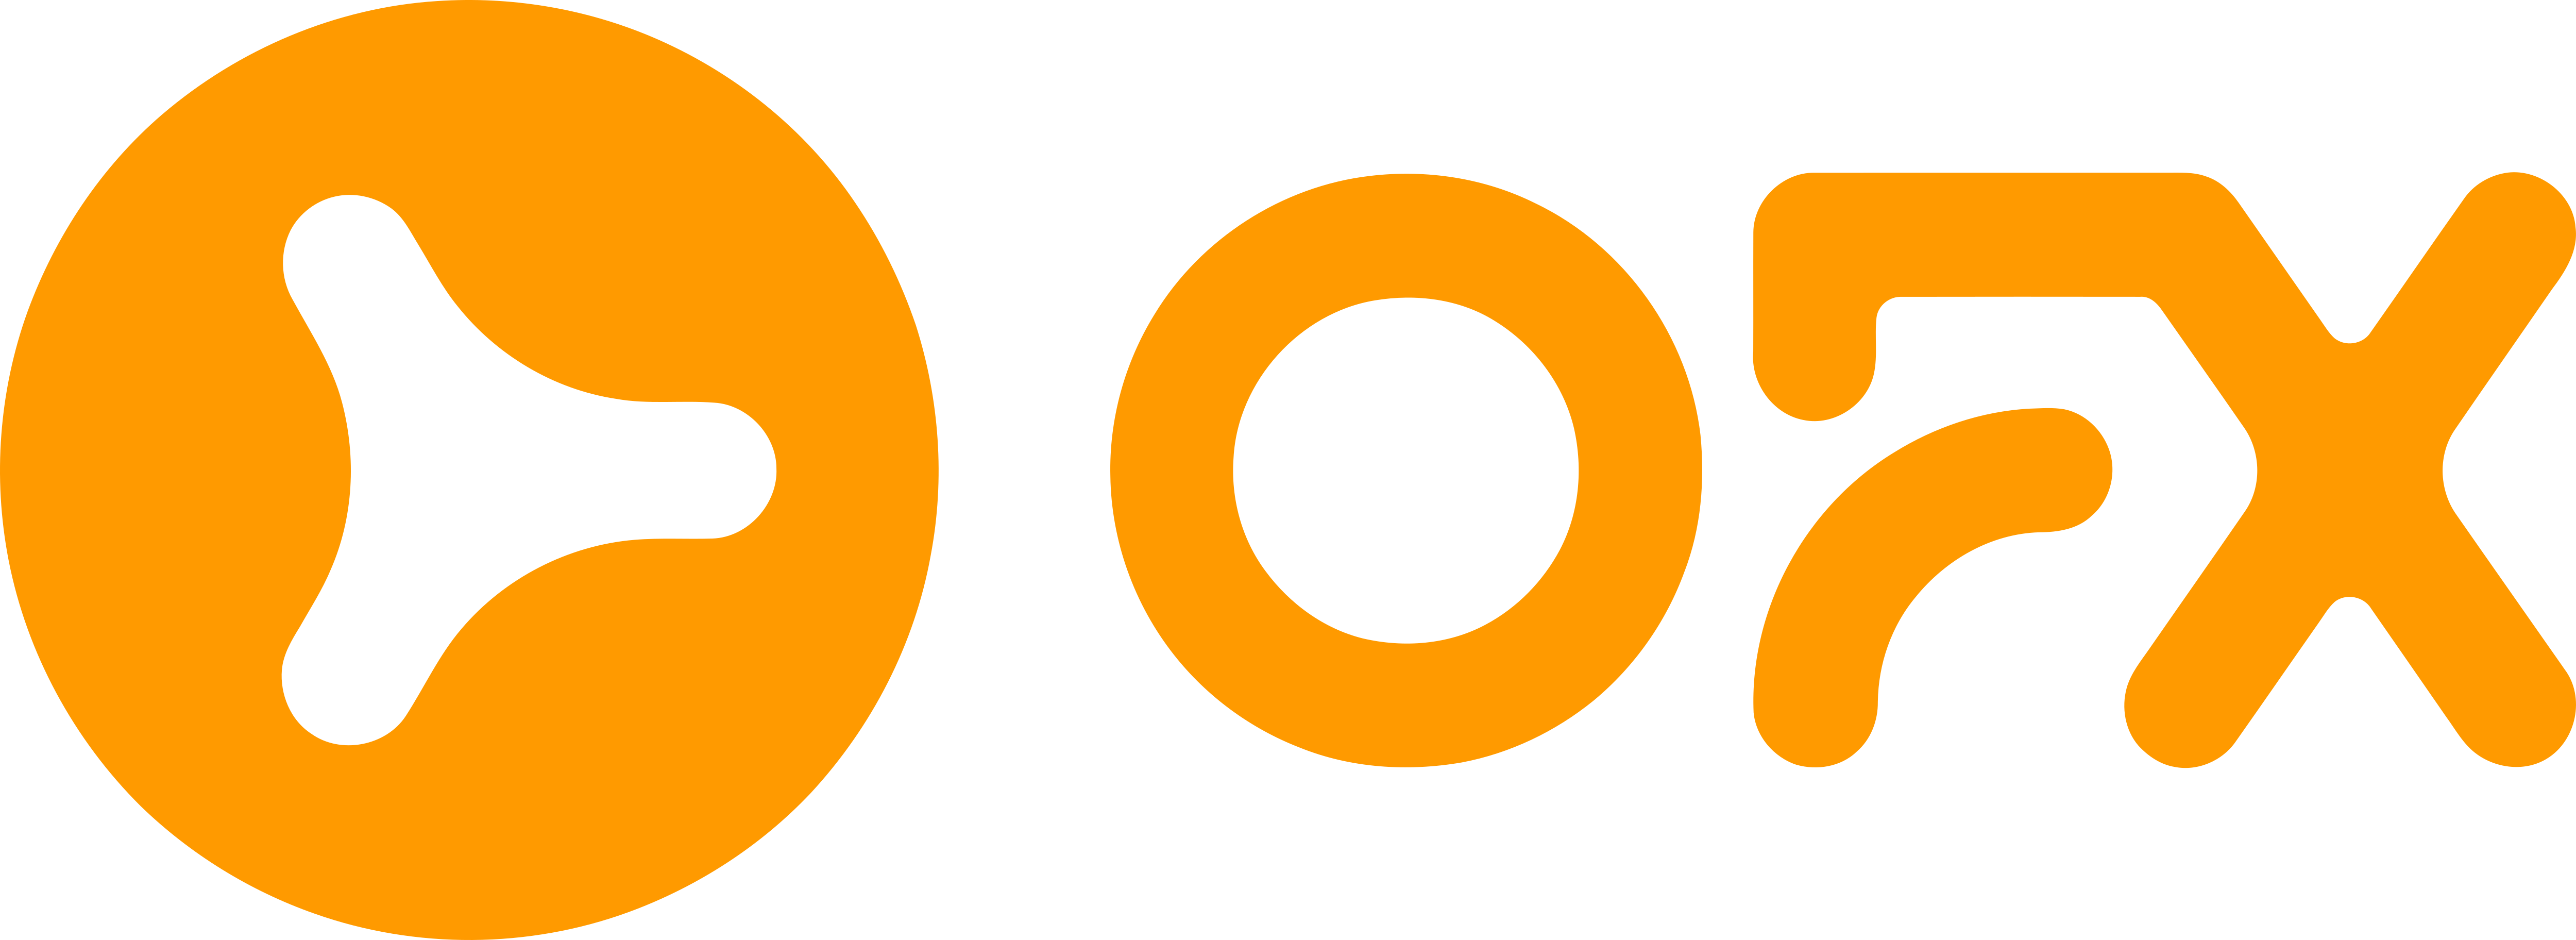 Ozforex logos lifelabs cryptocurrency